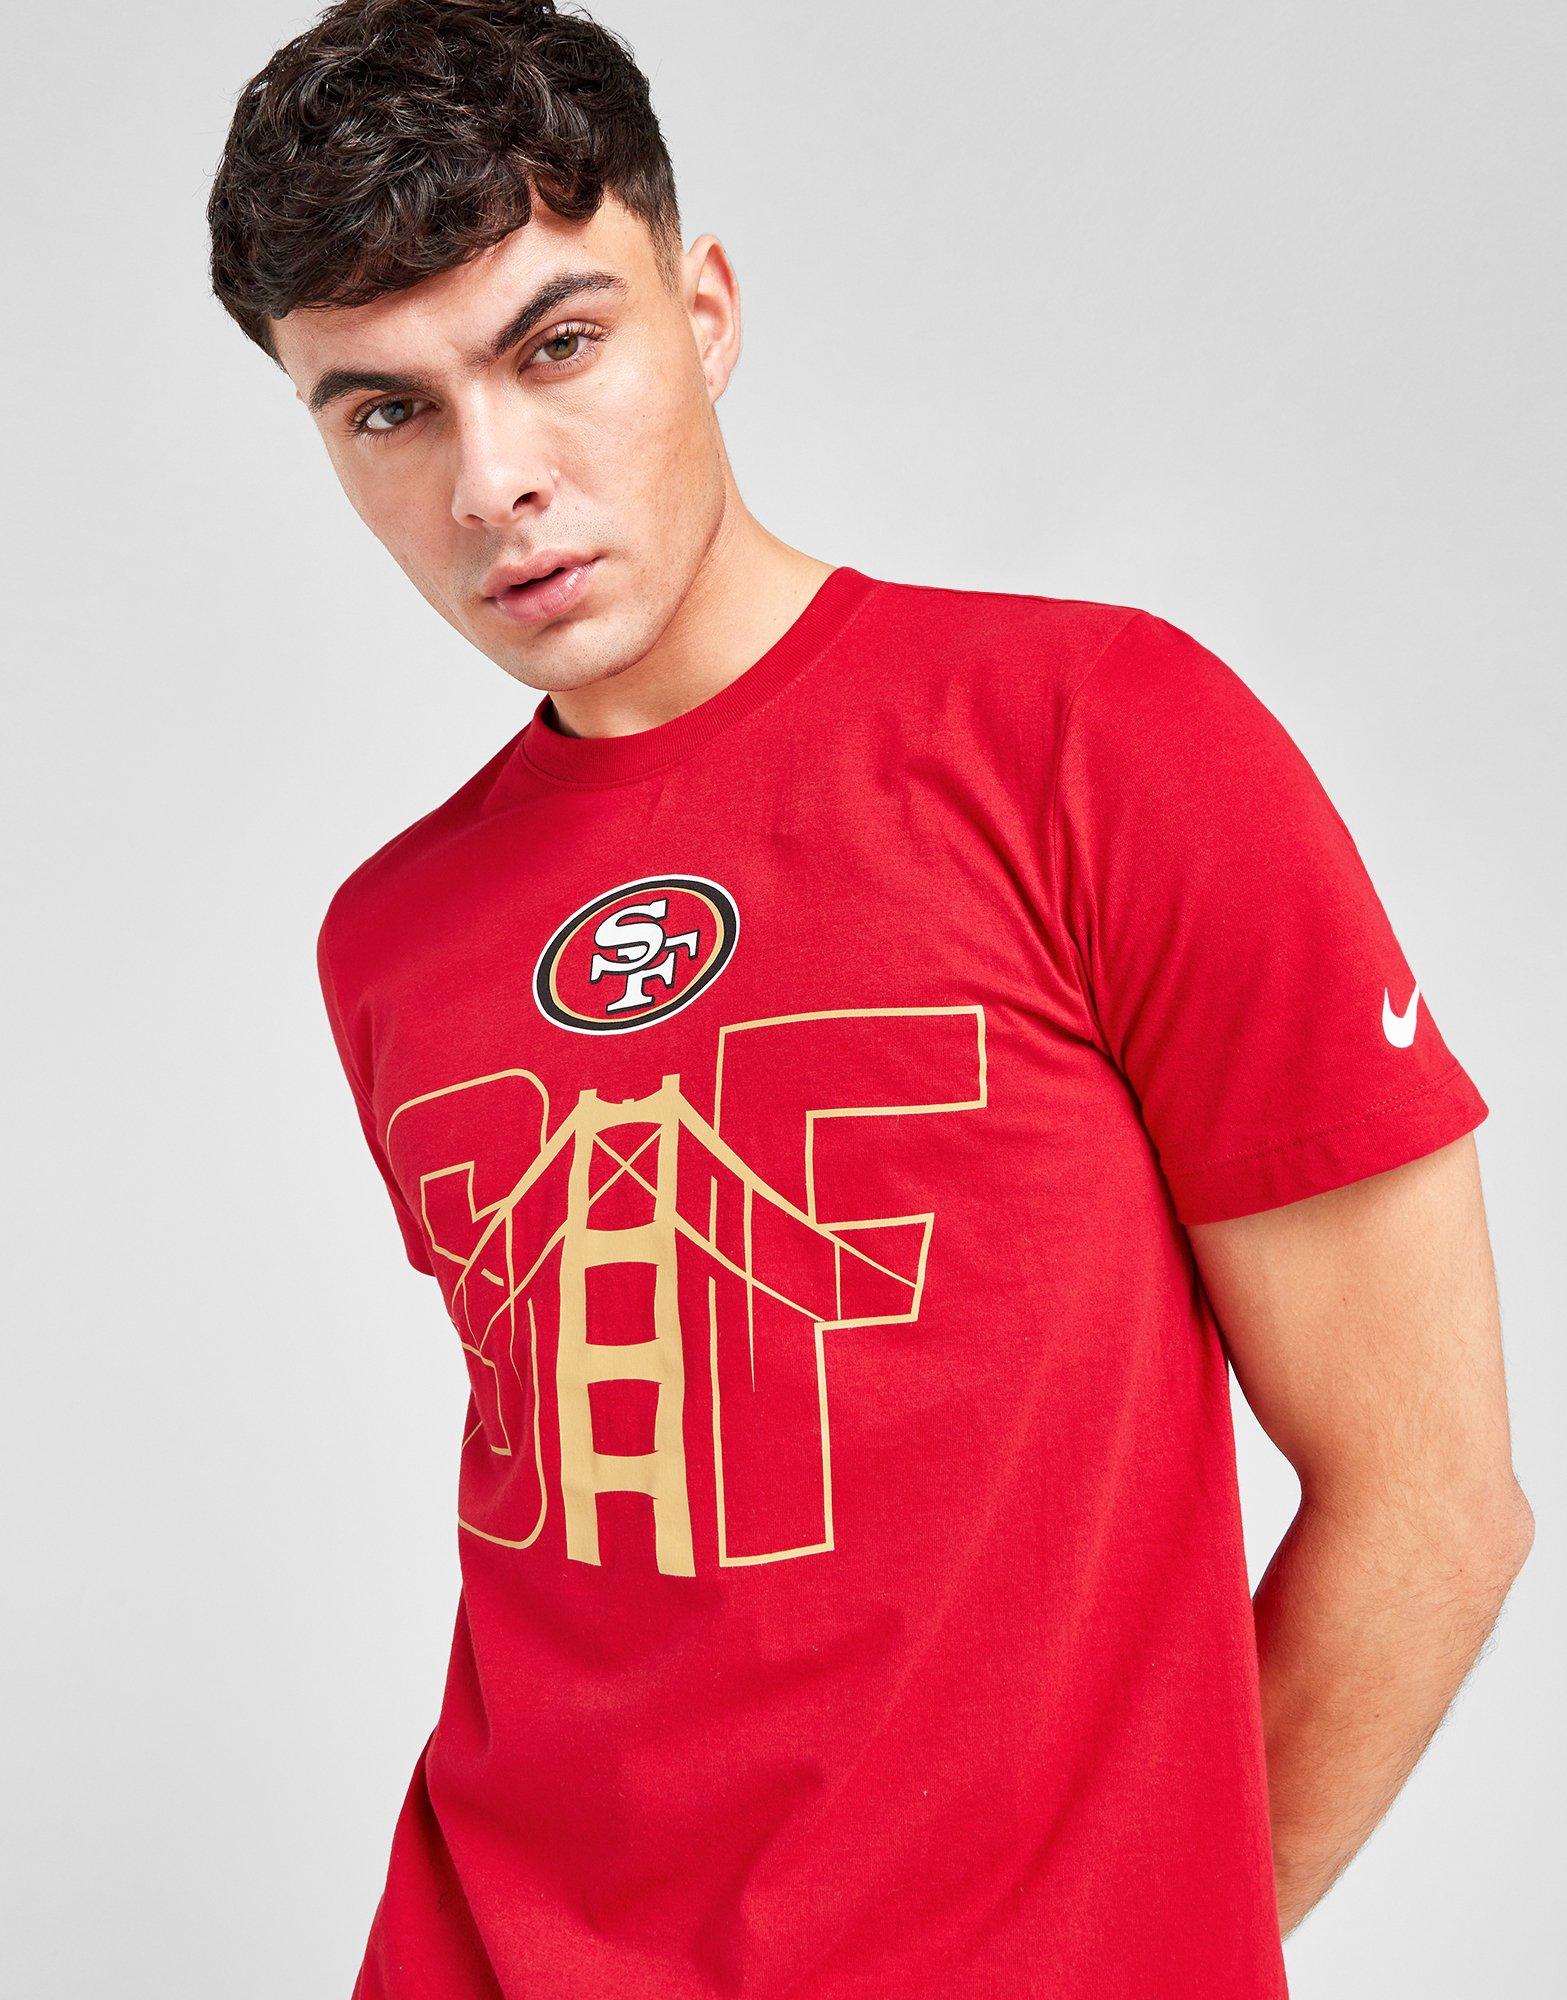 New Era San Francisco 49ers Men's Sugar Skull T-Shirt 21 Red / M